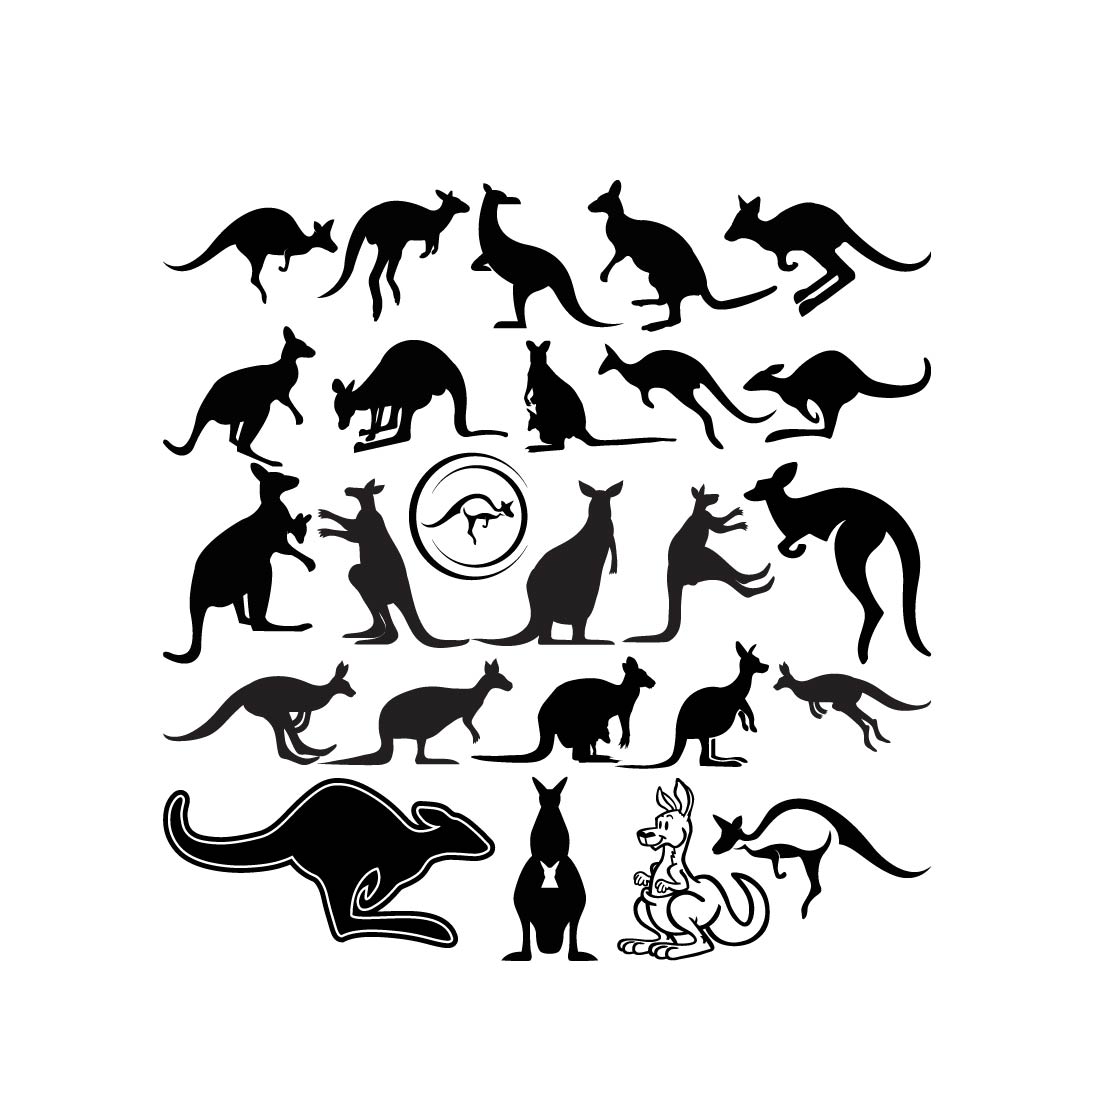 Kangaroo SVG, Kangaroo Cricut, Australia Wild Life, Kangaroo Monogram, Kangaroo Silhouette, Kangaroo Cut File, Animal Svg, Instant Download cover image.